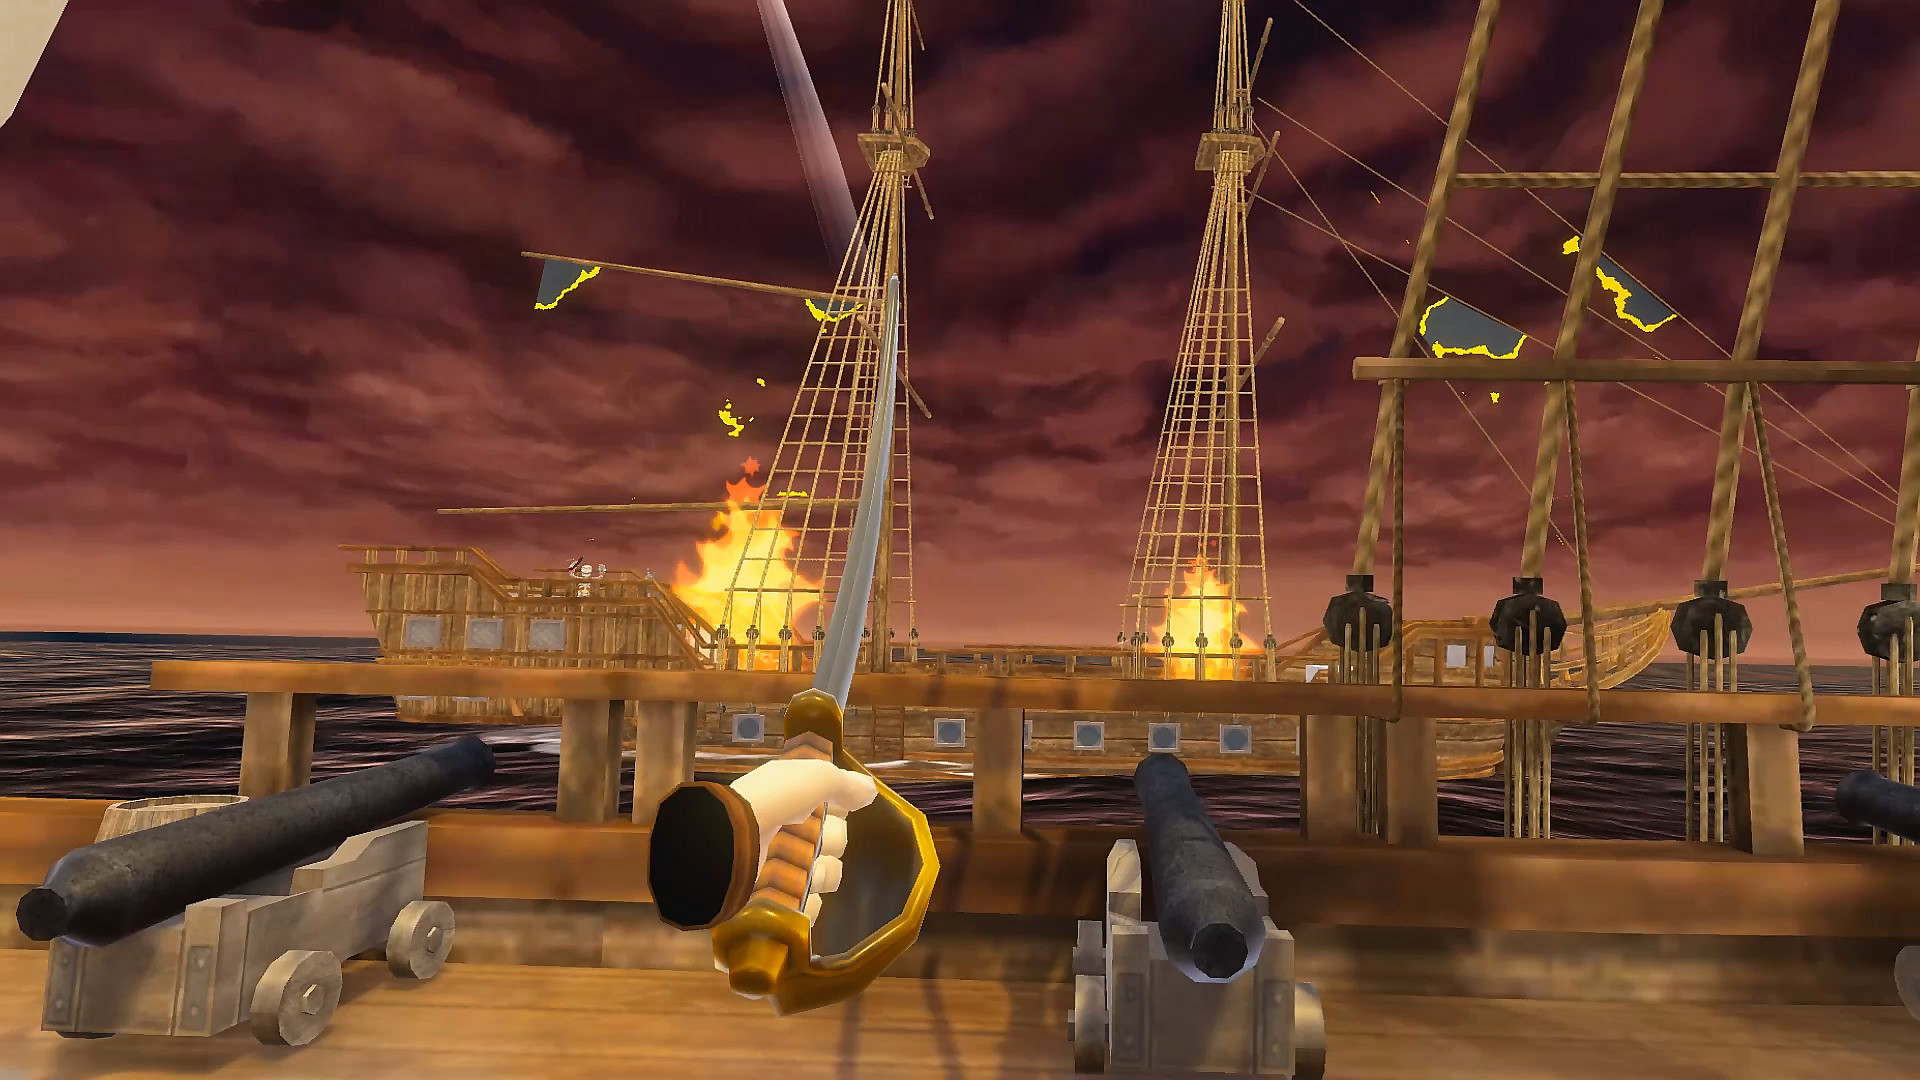 Pirates on Deck VR Free Download